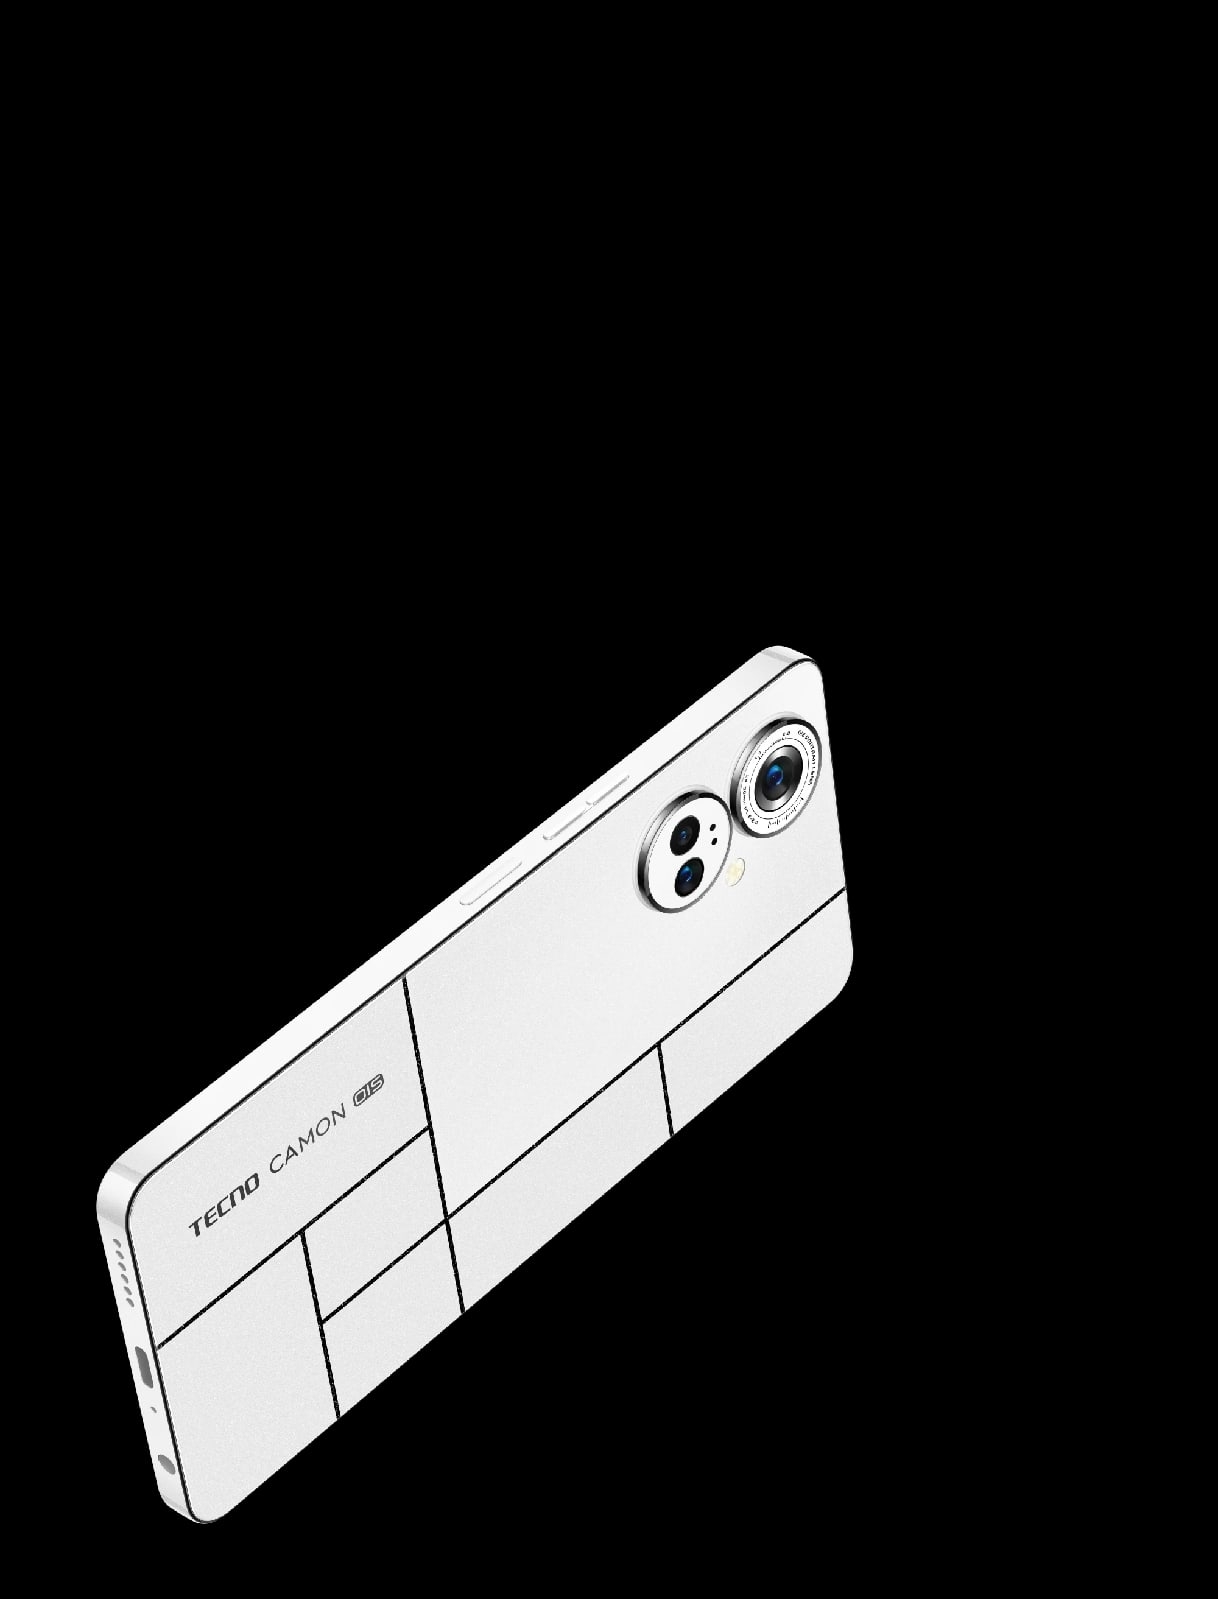 Компанией Tecno представлен смартфон «хамелеон» меняющий расцветки - Camon 19 Pro Mondrian Edition.